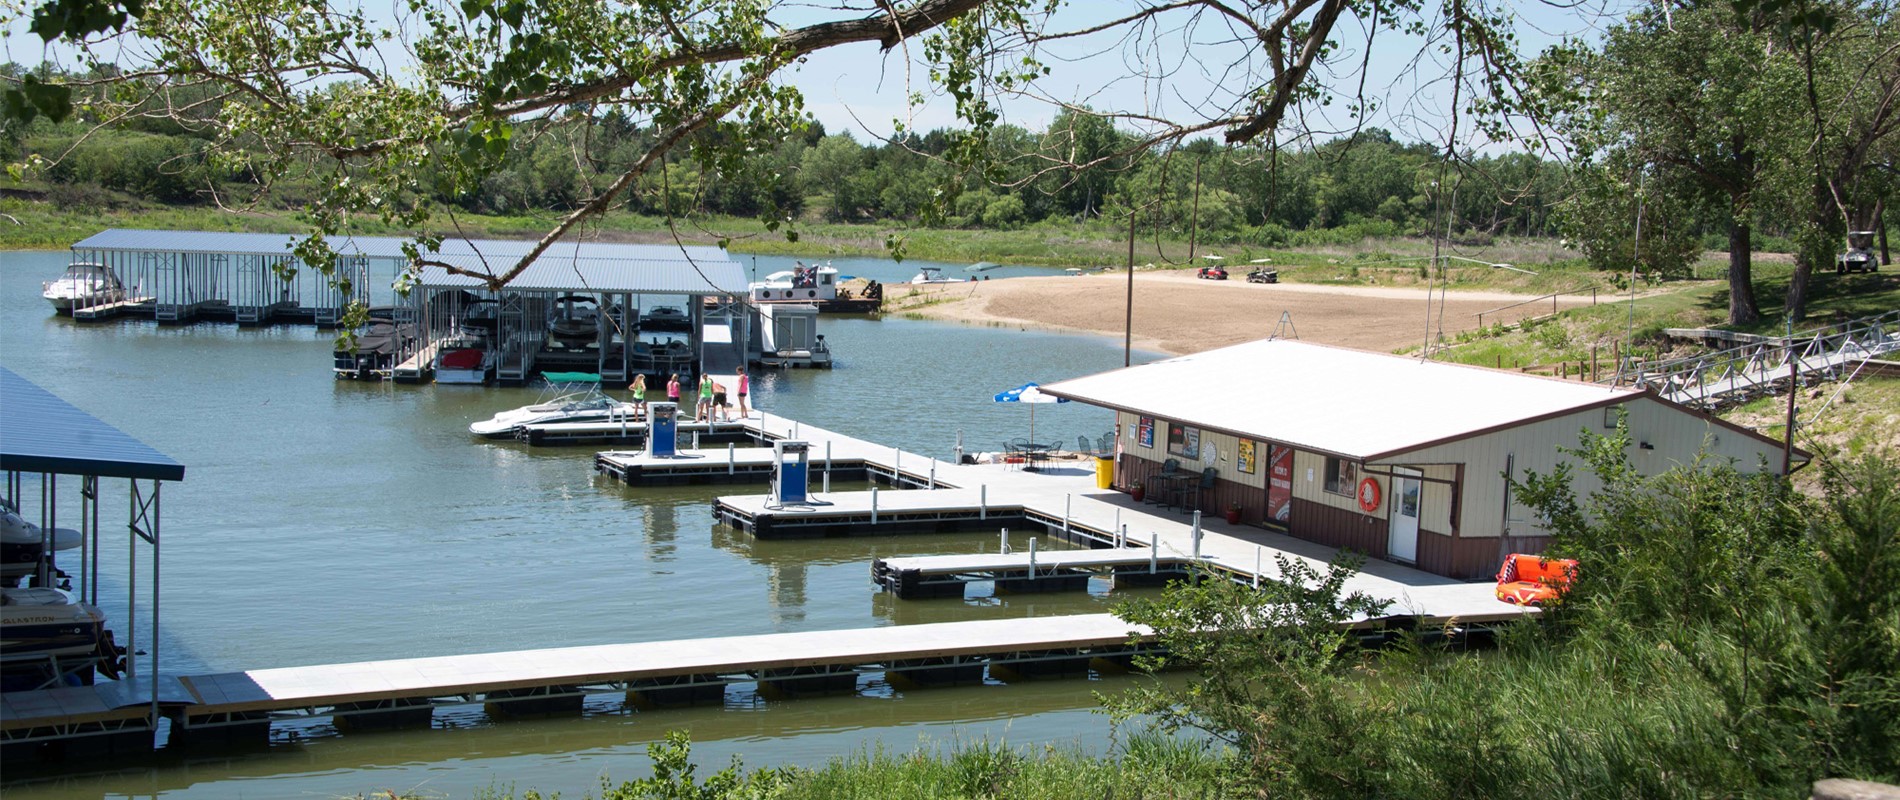 boat dock on harlan county lake